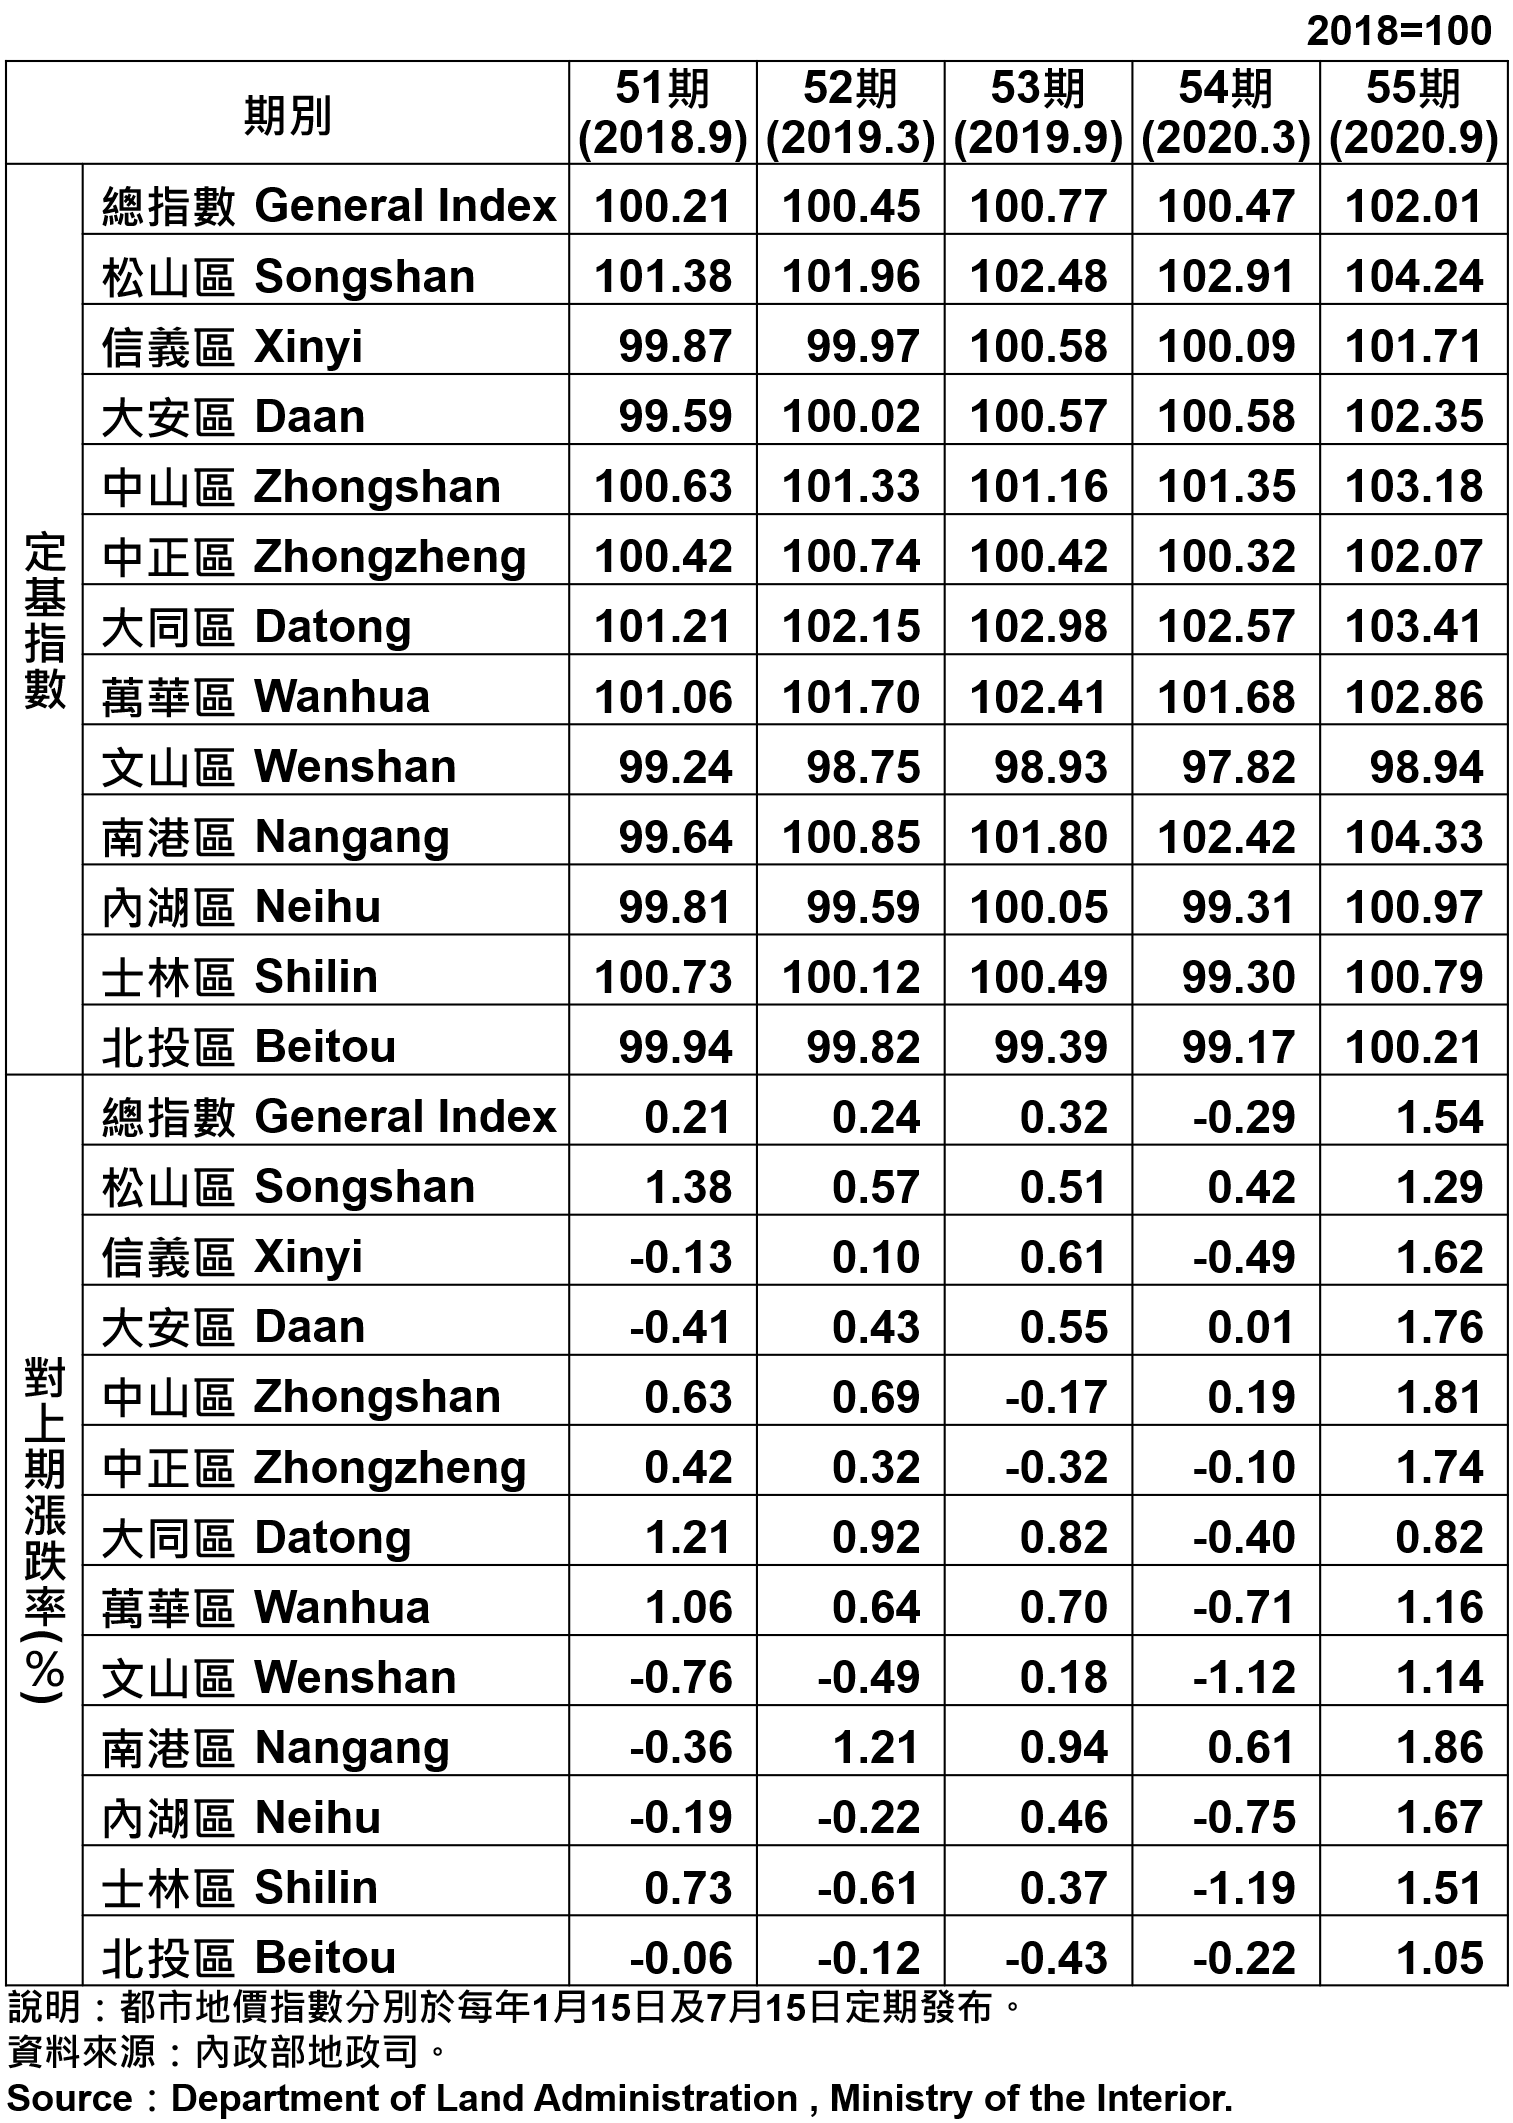 臺北市都市地價指數分區表—55期 Taipei's Urban Land Price Indexes by Districts—55th